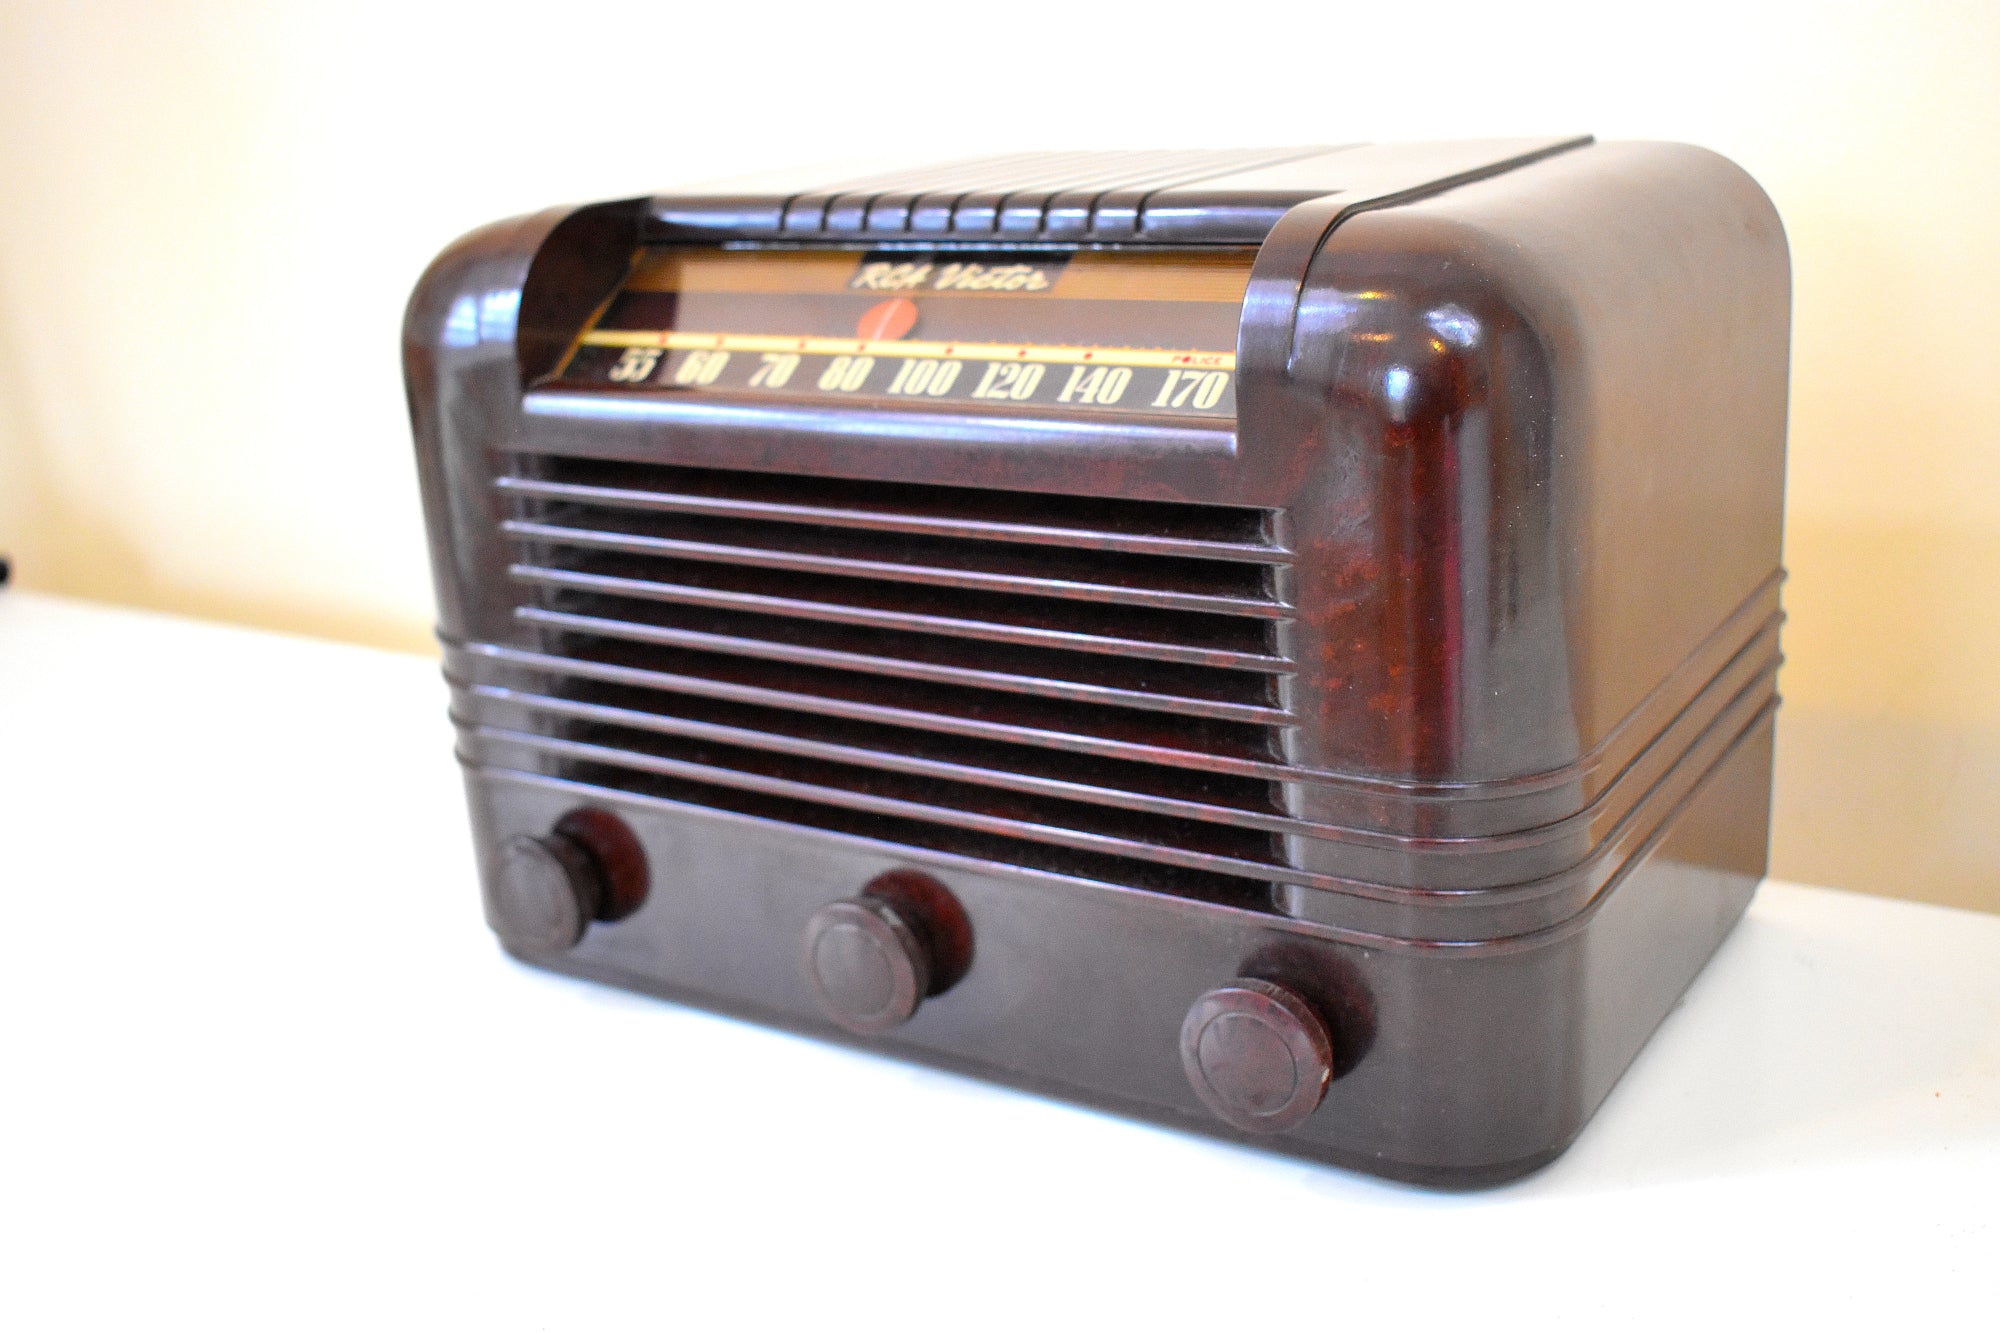 Magnificent Brown Bakelite 1940 RCA Victor Model 15X Vacuum Tube AM Radio Boom Box!